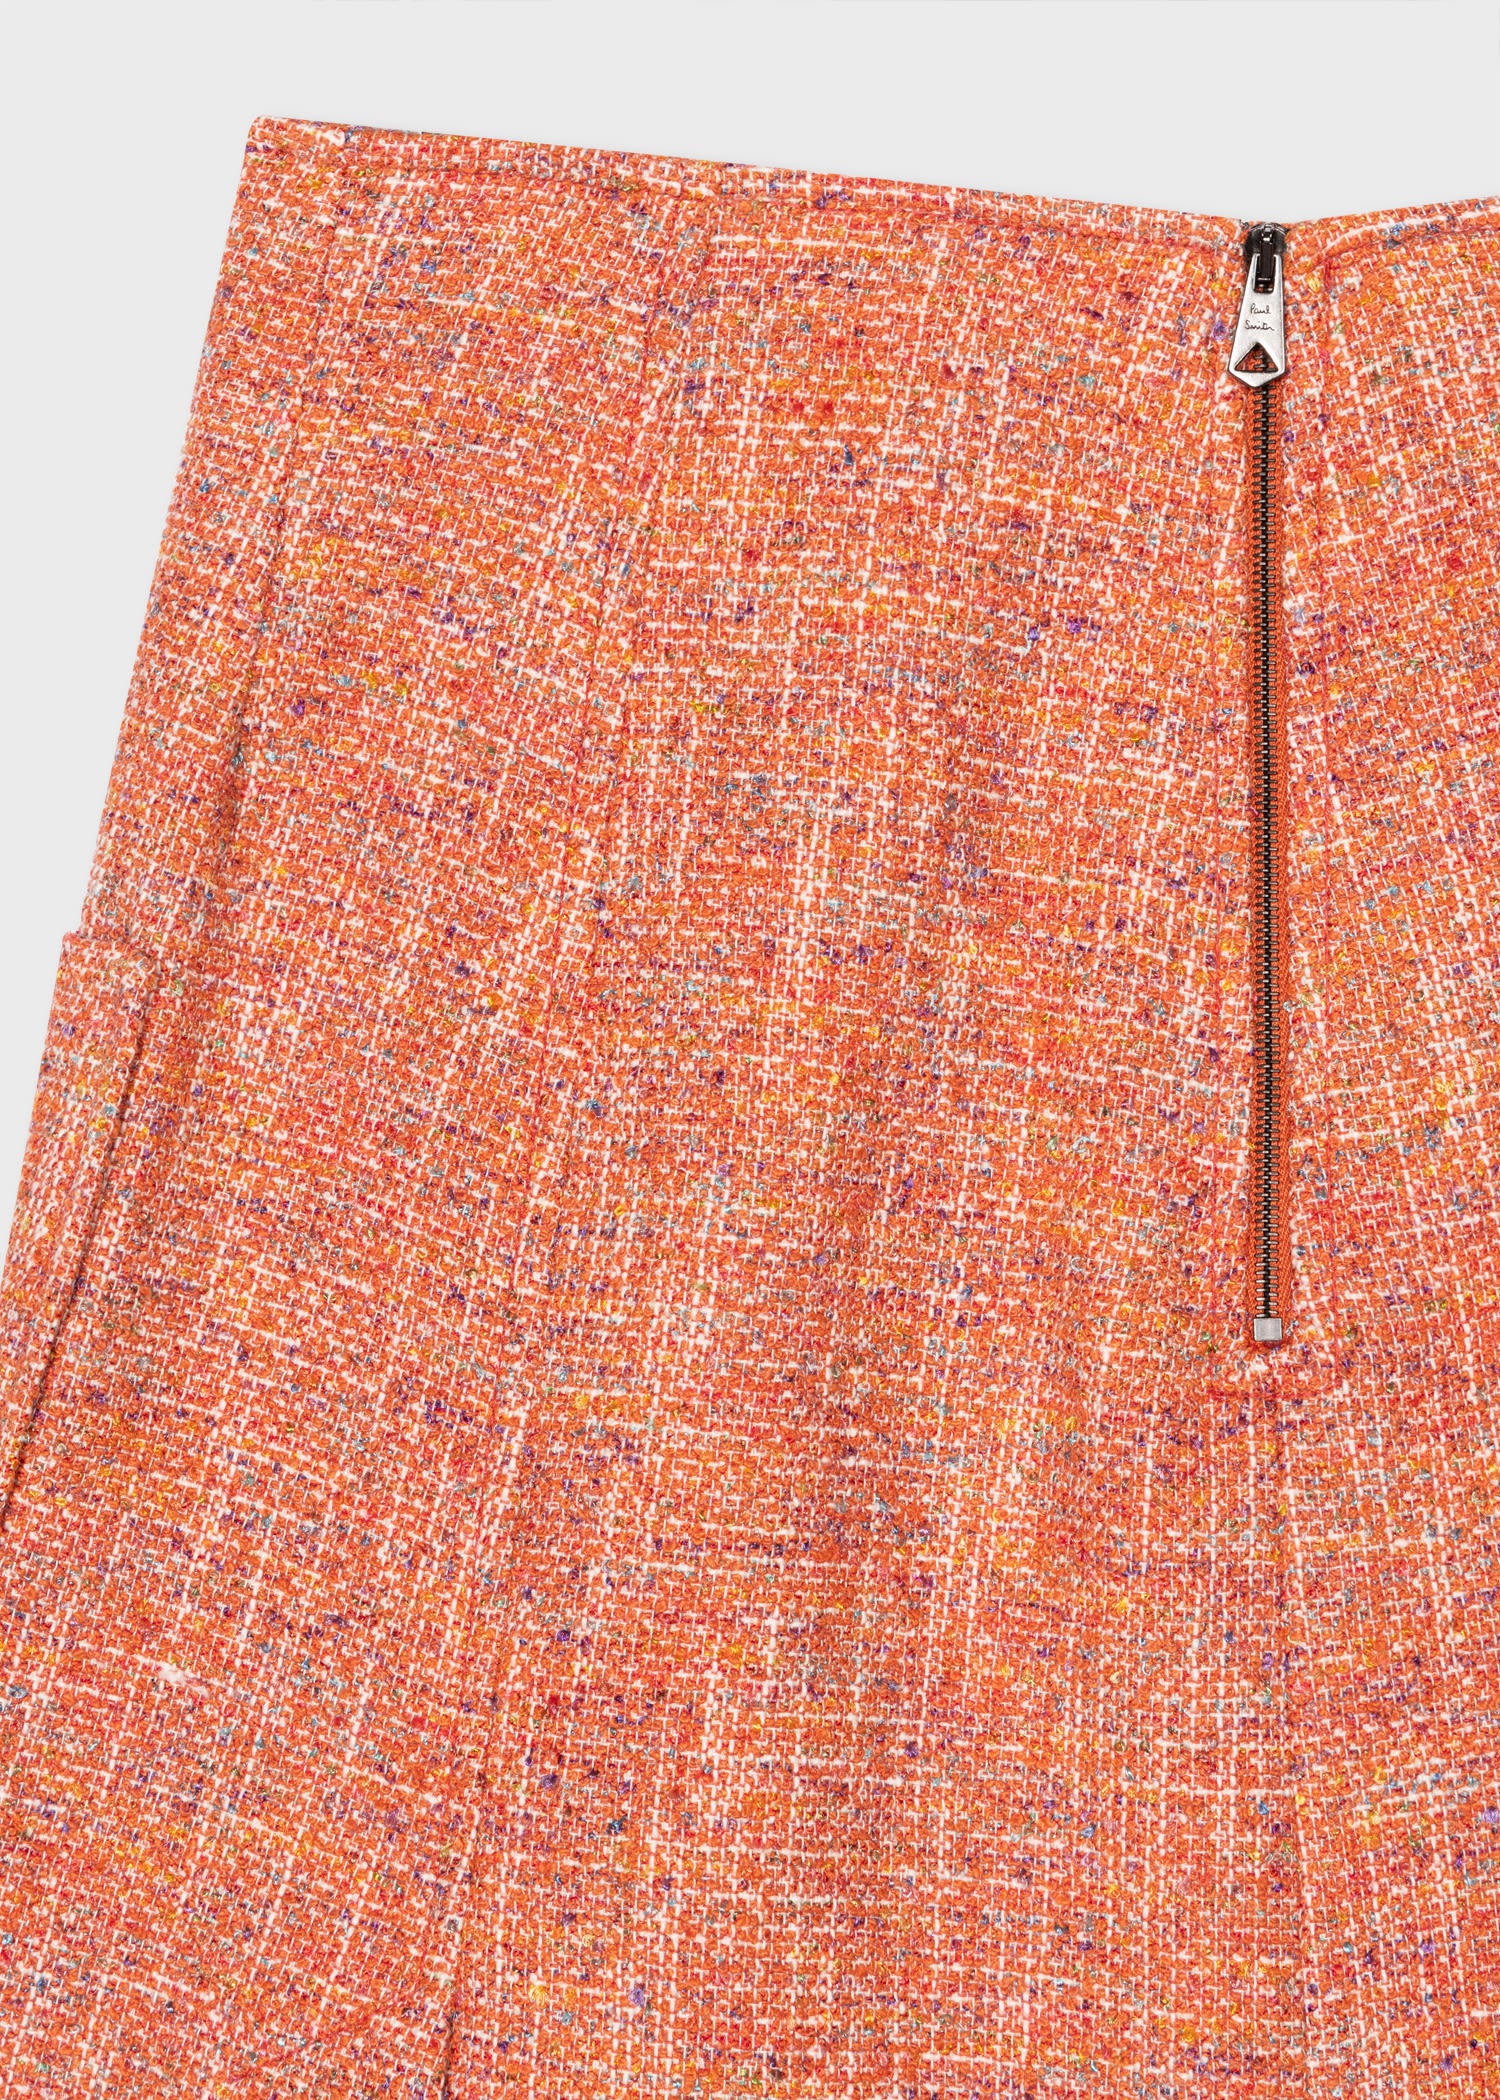 Orange Tweed A-Line Skirt - 2